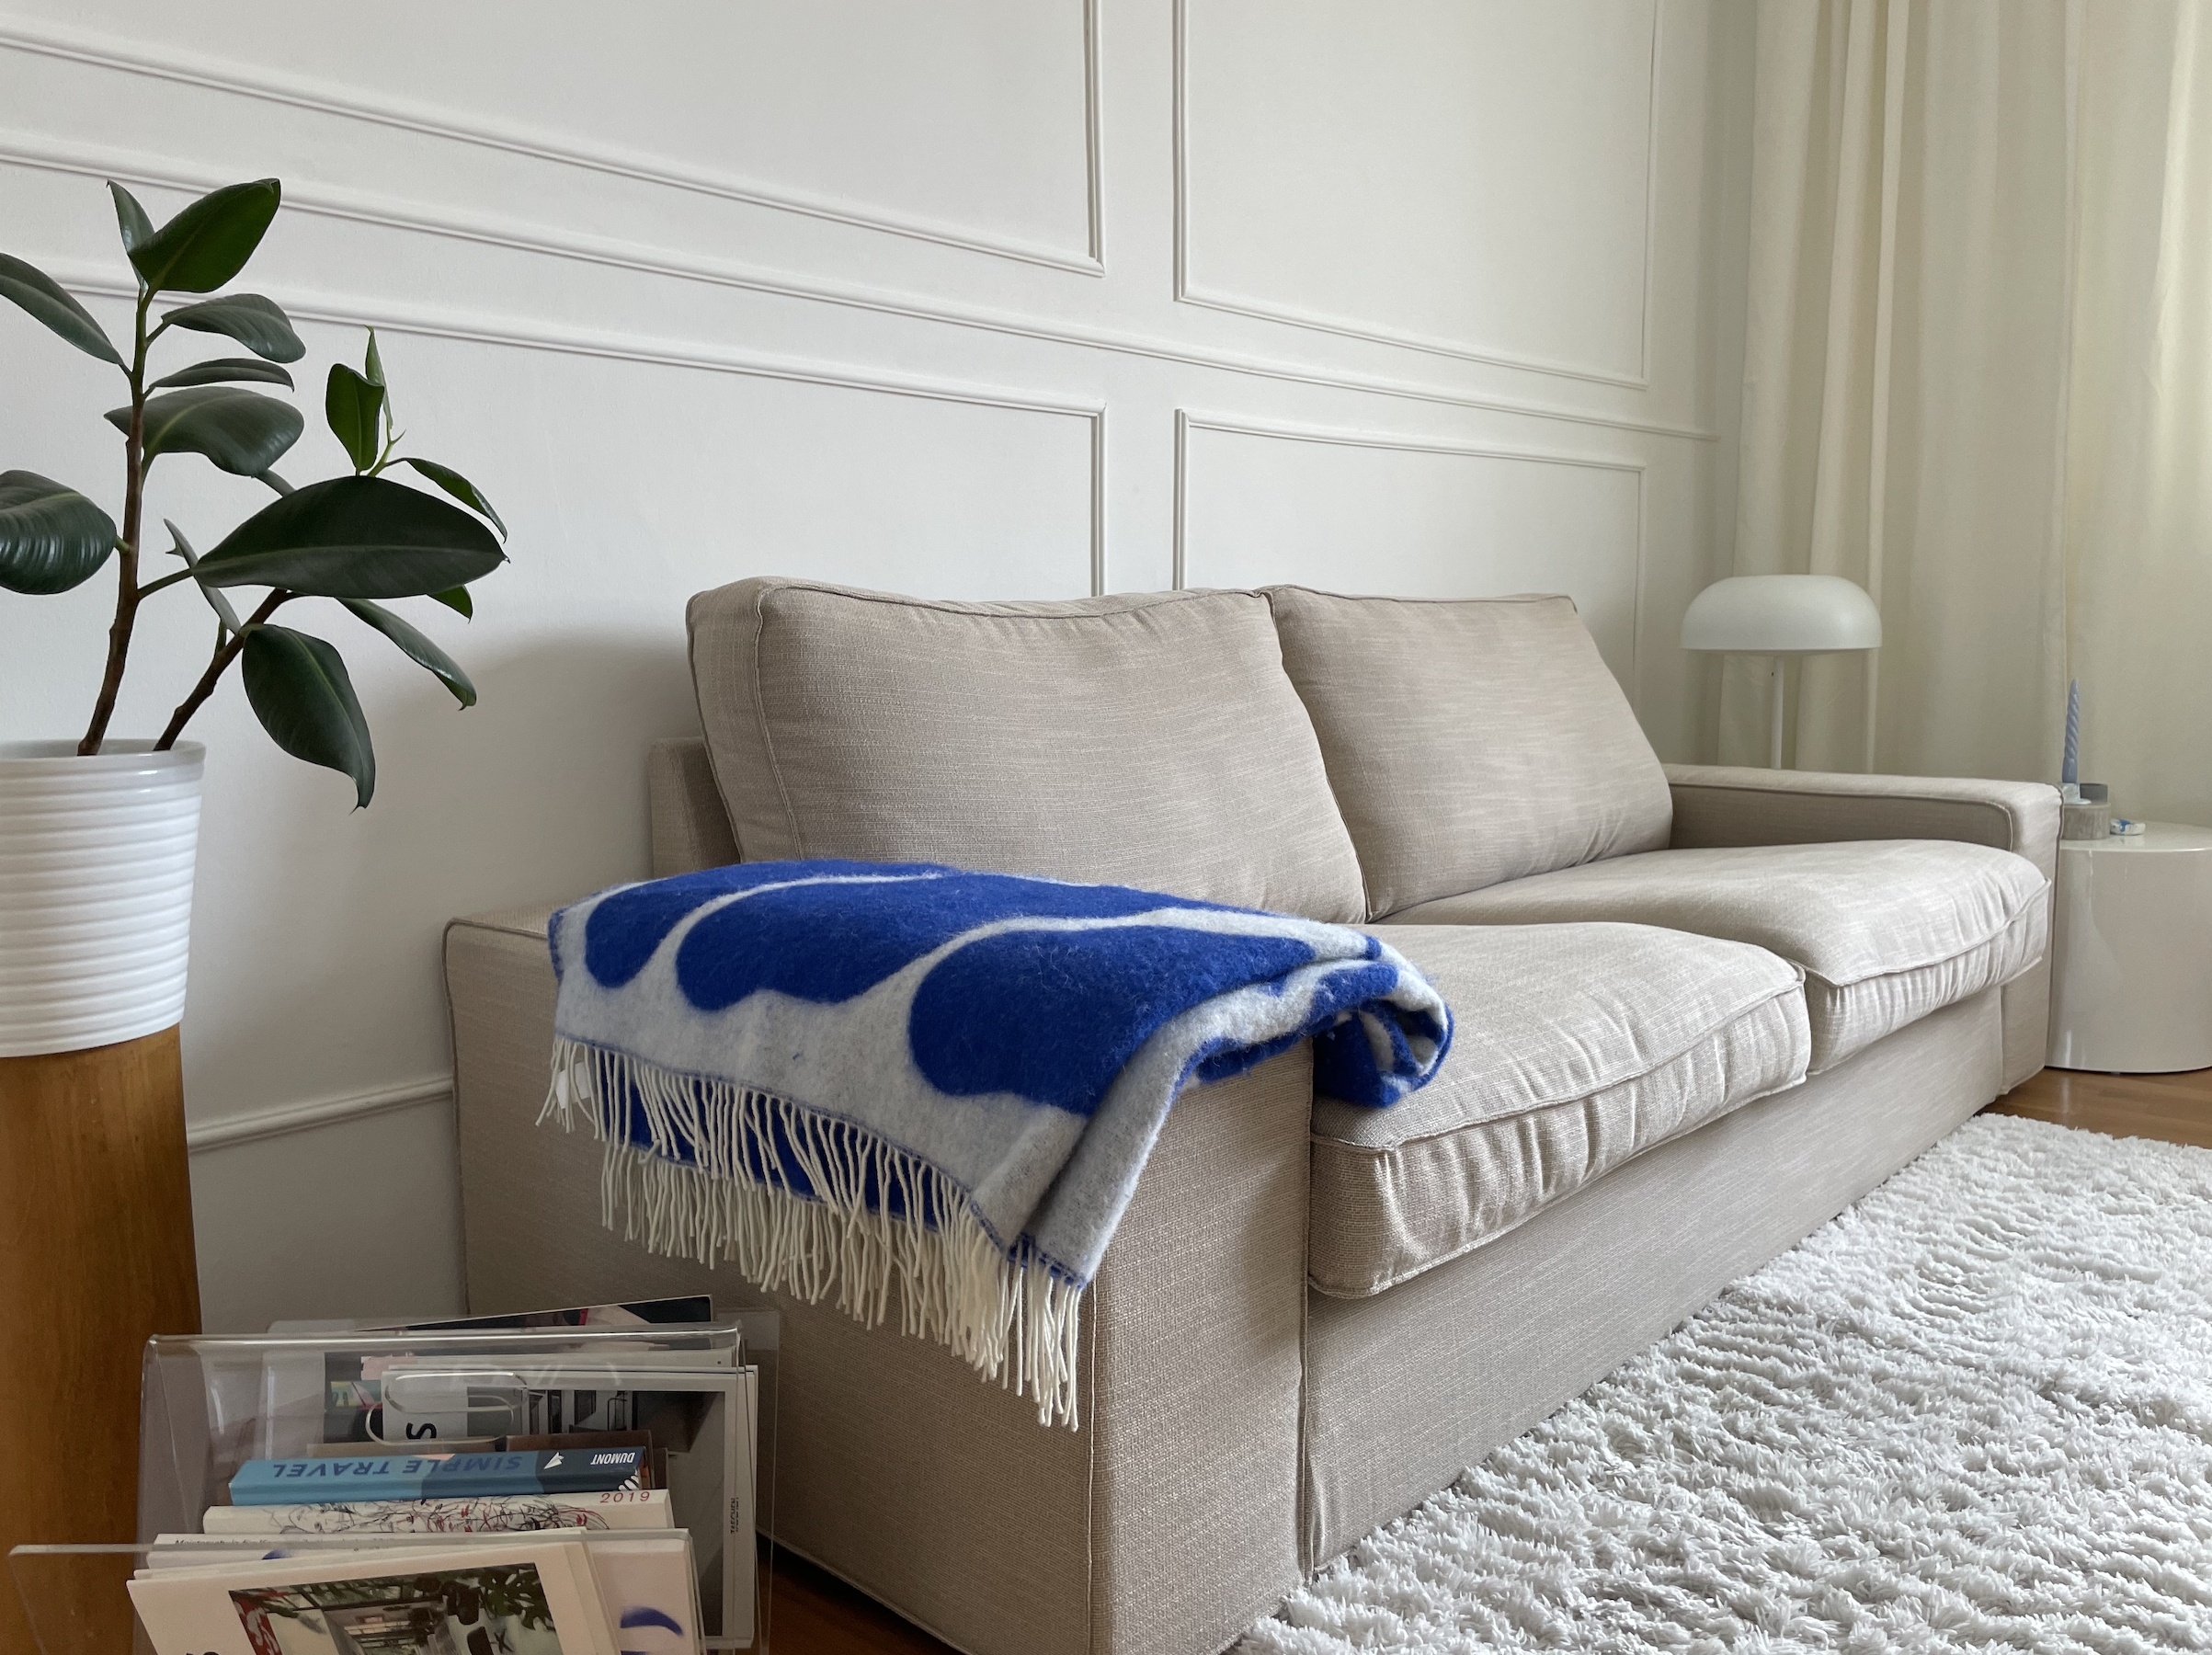 livingroom inspiration 🛋🌿

#arketofficial #blanket #naturalcolor #blue #diywall #ikea #home24 #table 